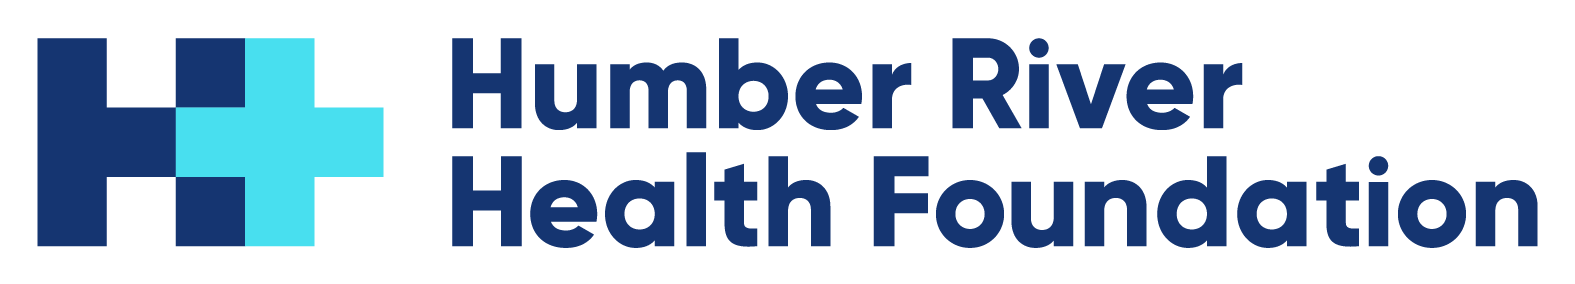 humber_river_health_foundation_(logo).png